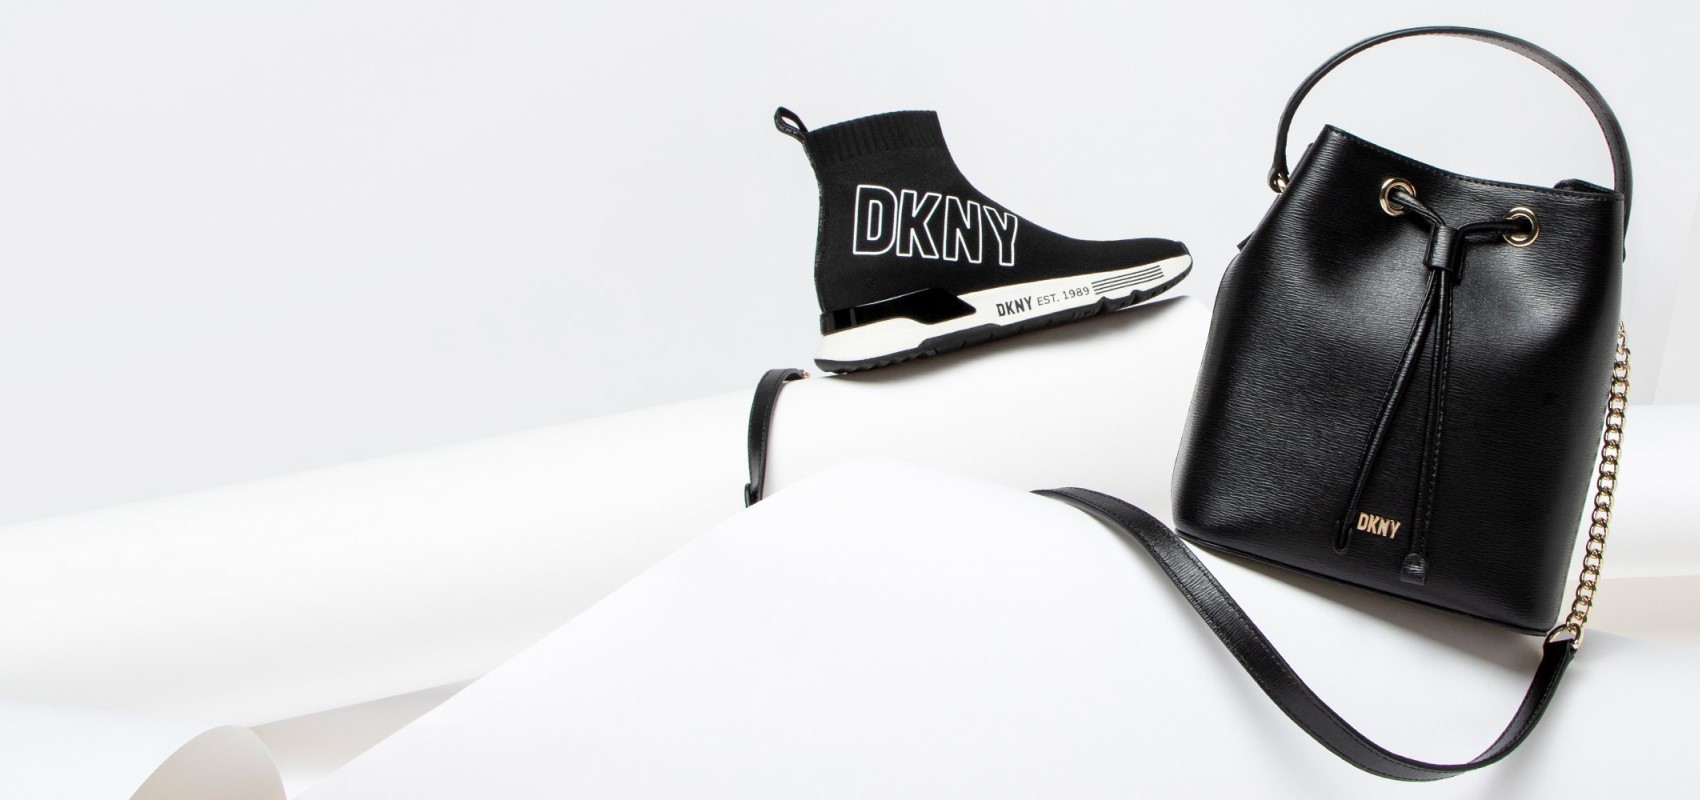 DKNY Bryant Convertible Strap Dome Satchel Handbag Purse for sale online |  eBay